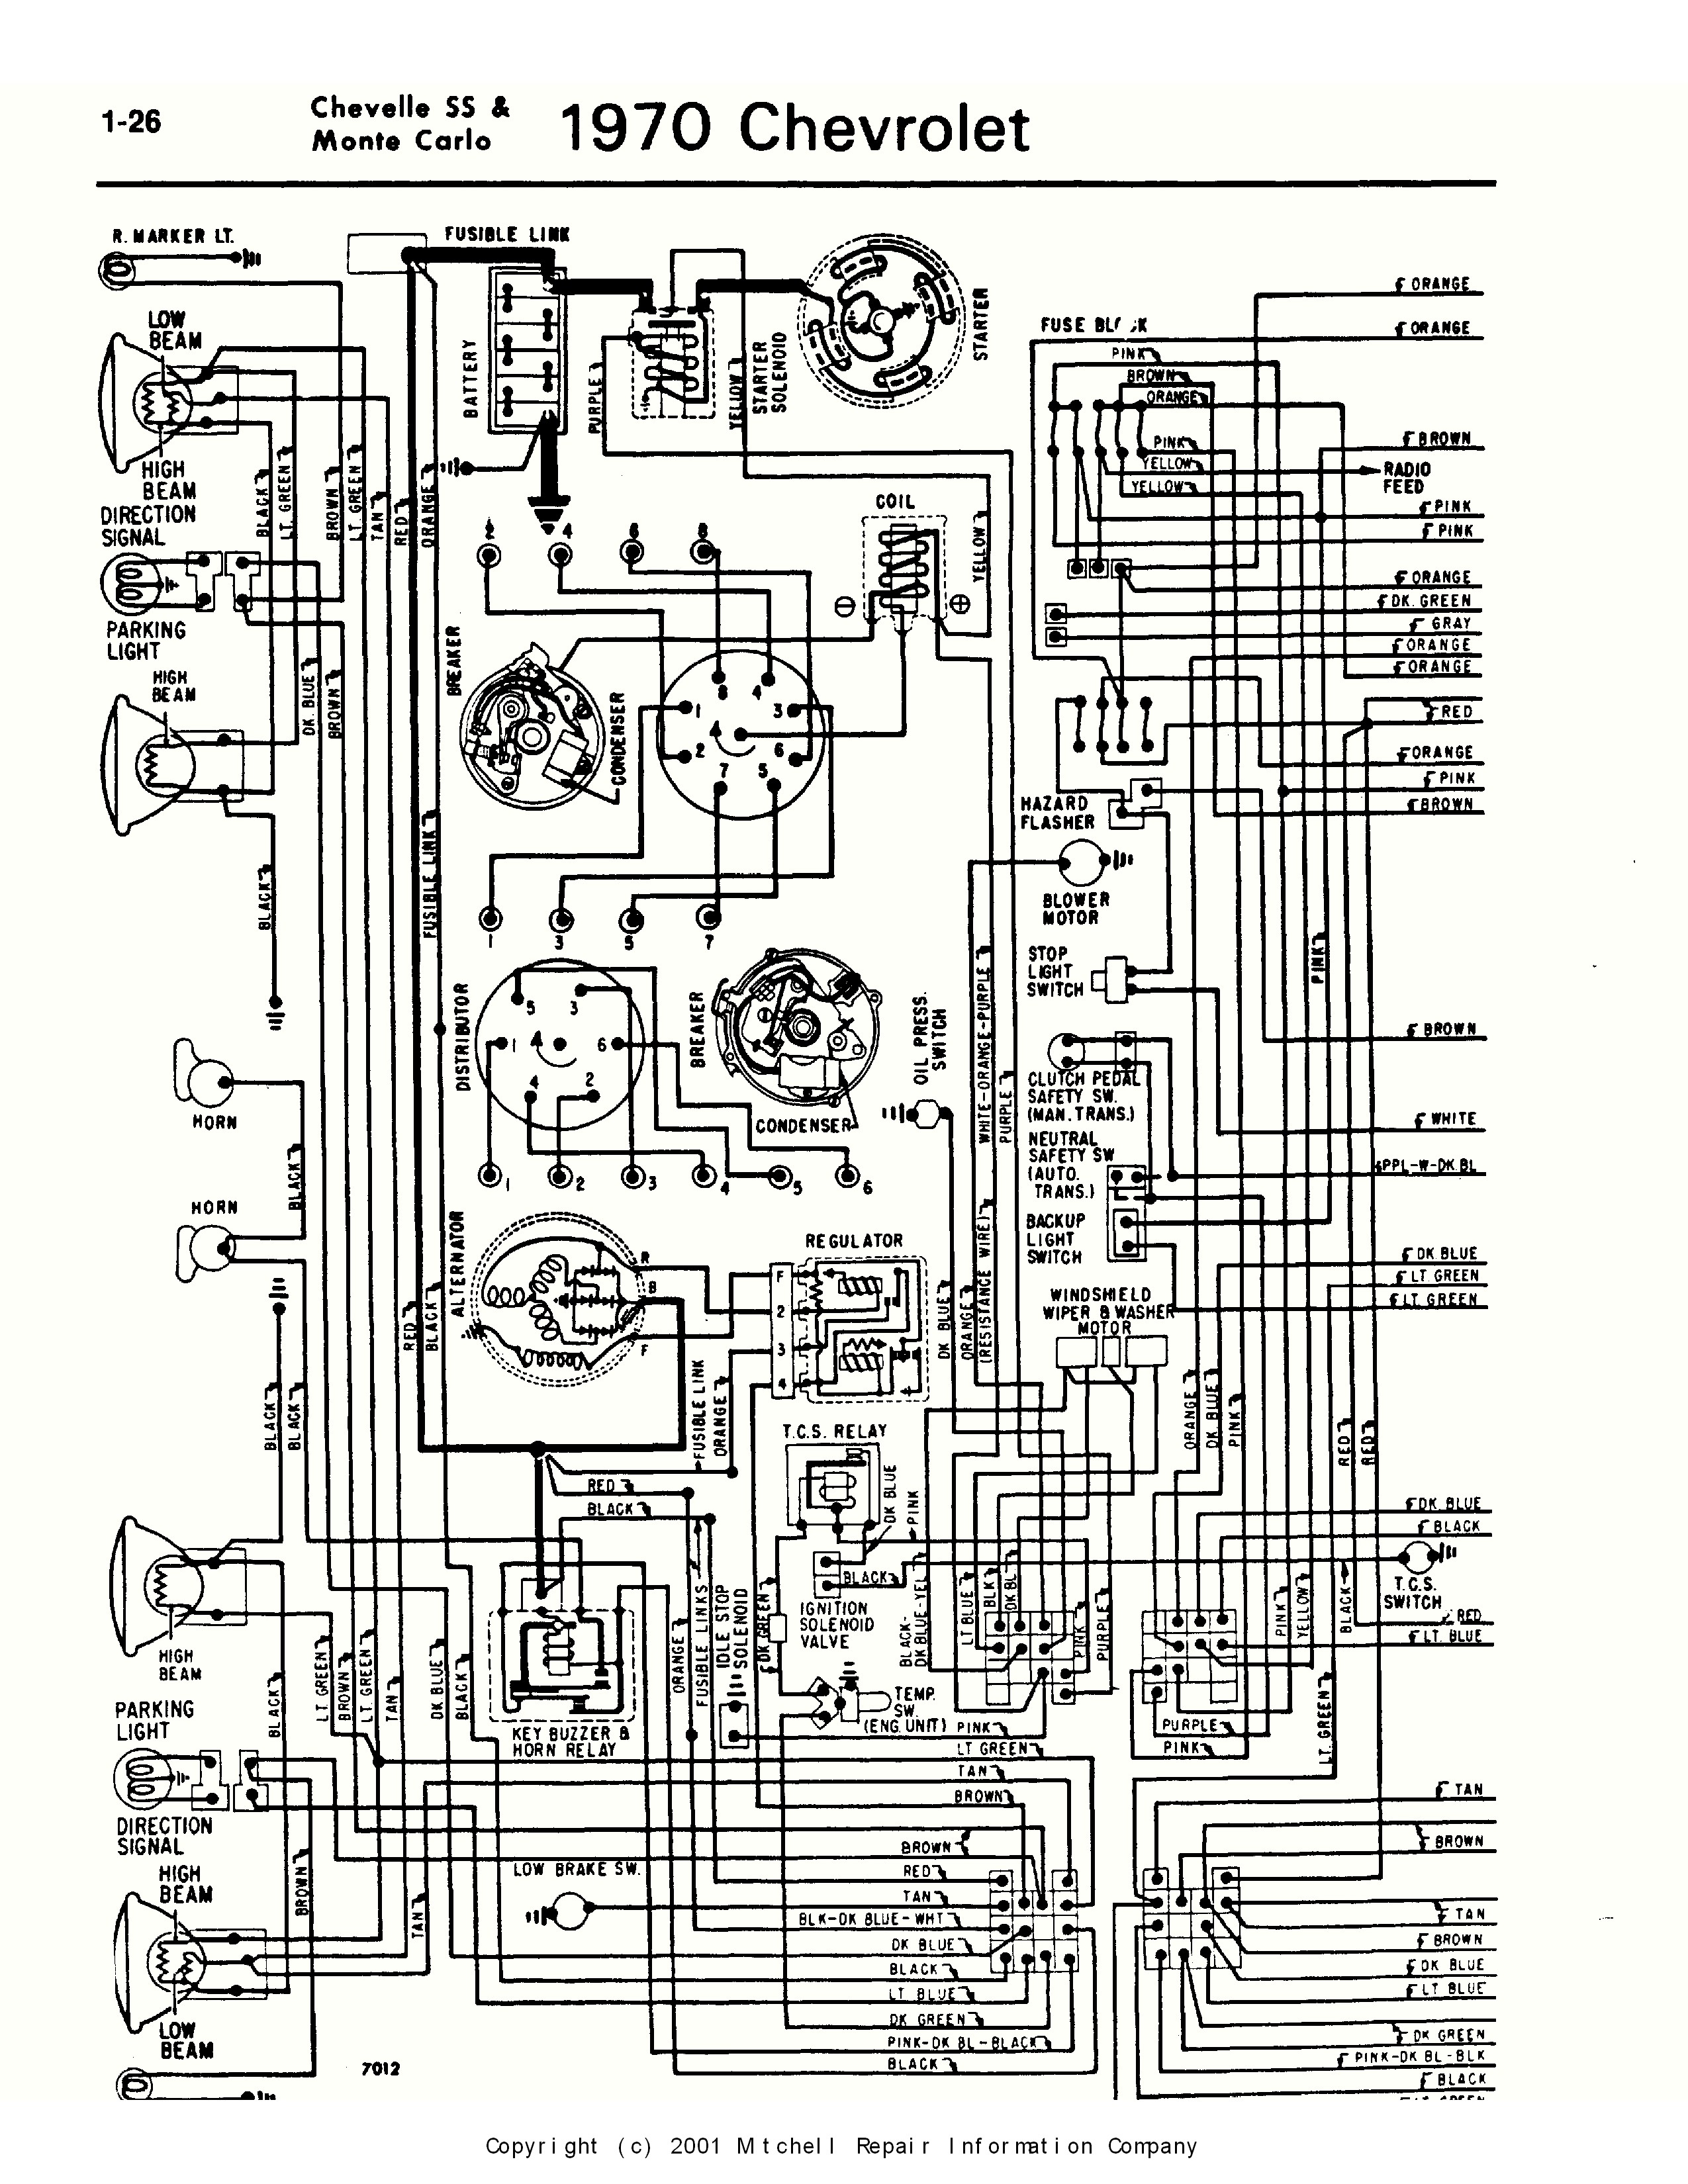 Chevy S10 Engine Diagram Spider 2000 Wiring Diagram 1967 El Camino Painless Wiring Diagram Of Chevy S10 Engine Diagram